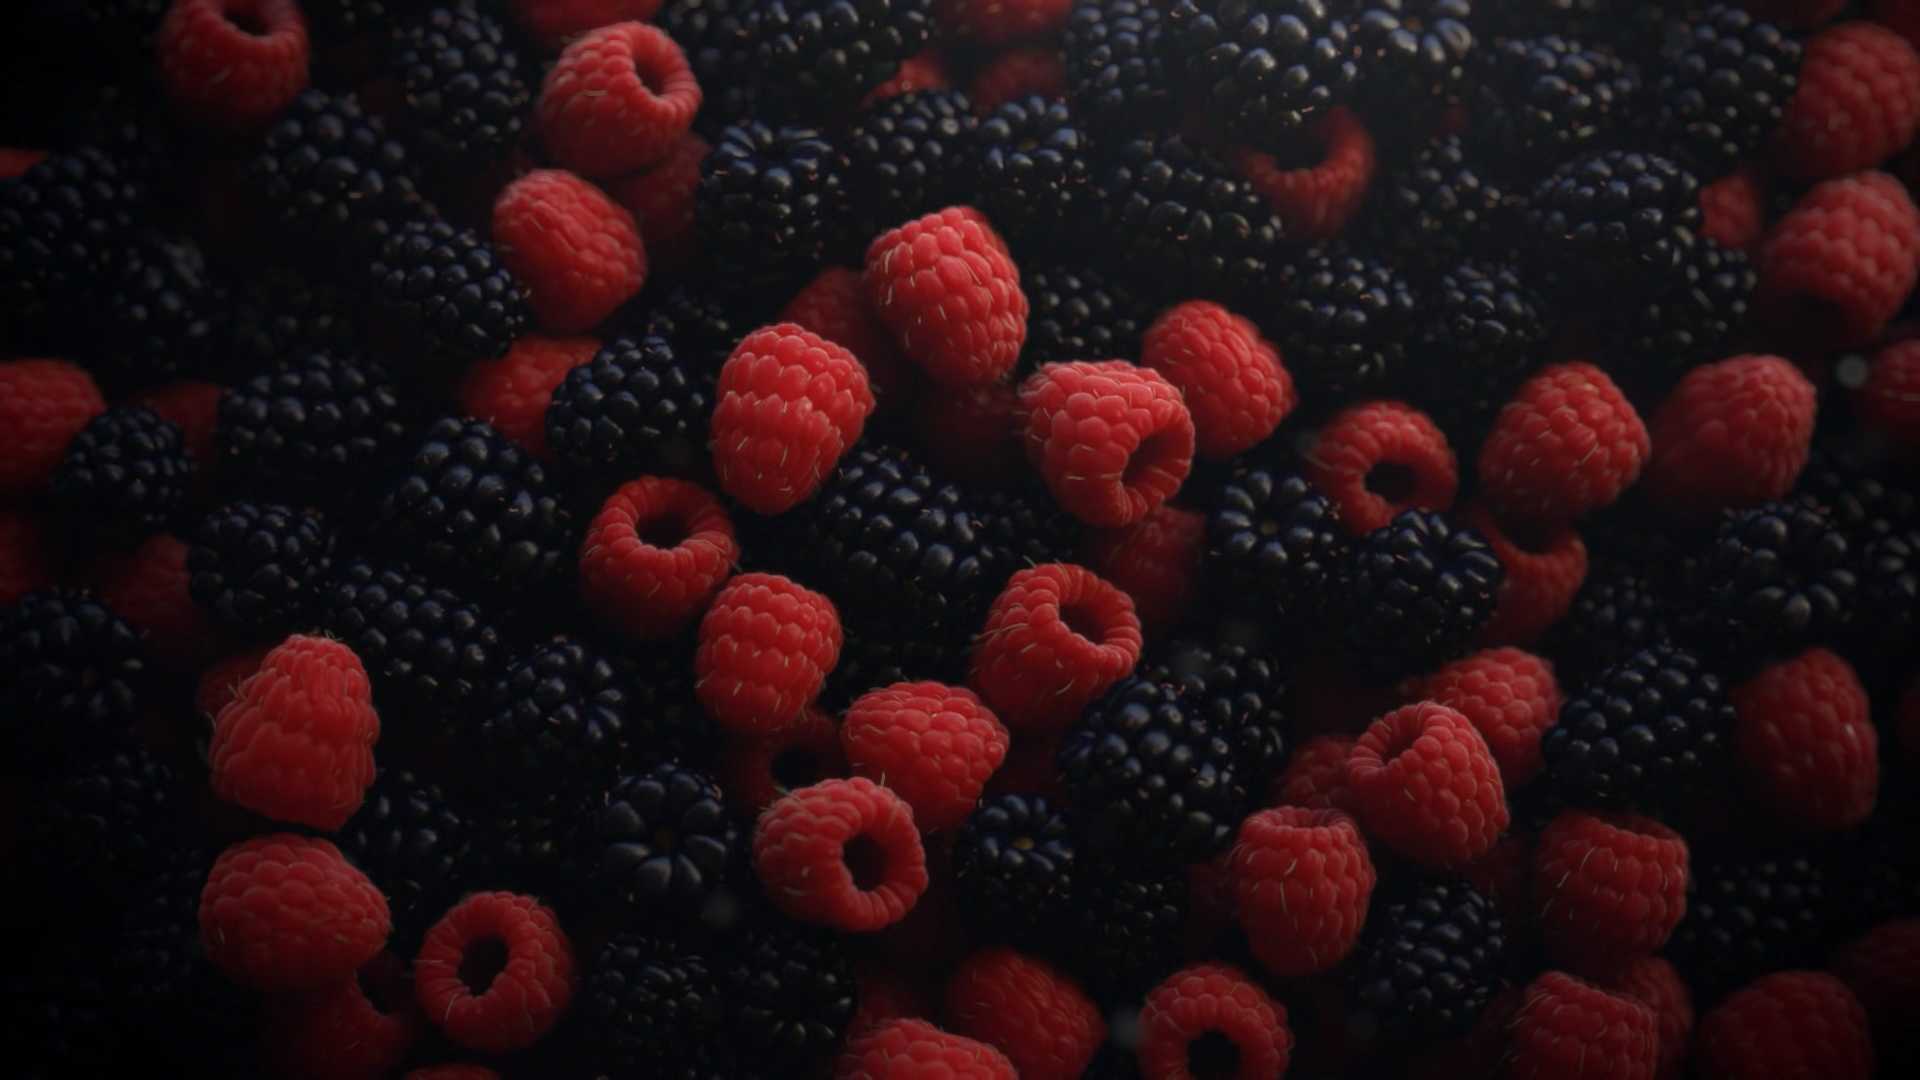 Appetizing fresh raspberries and blackberries